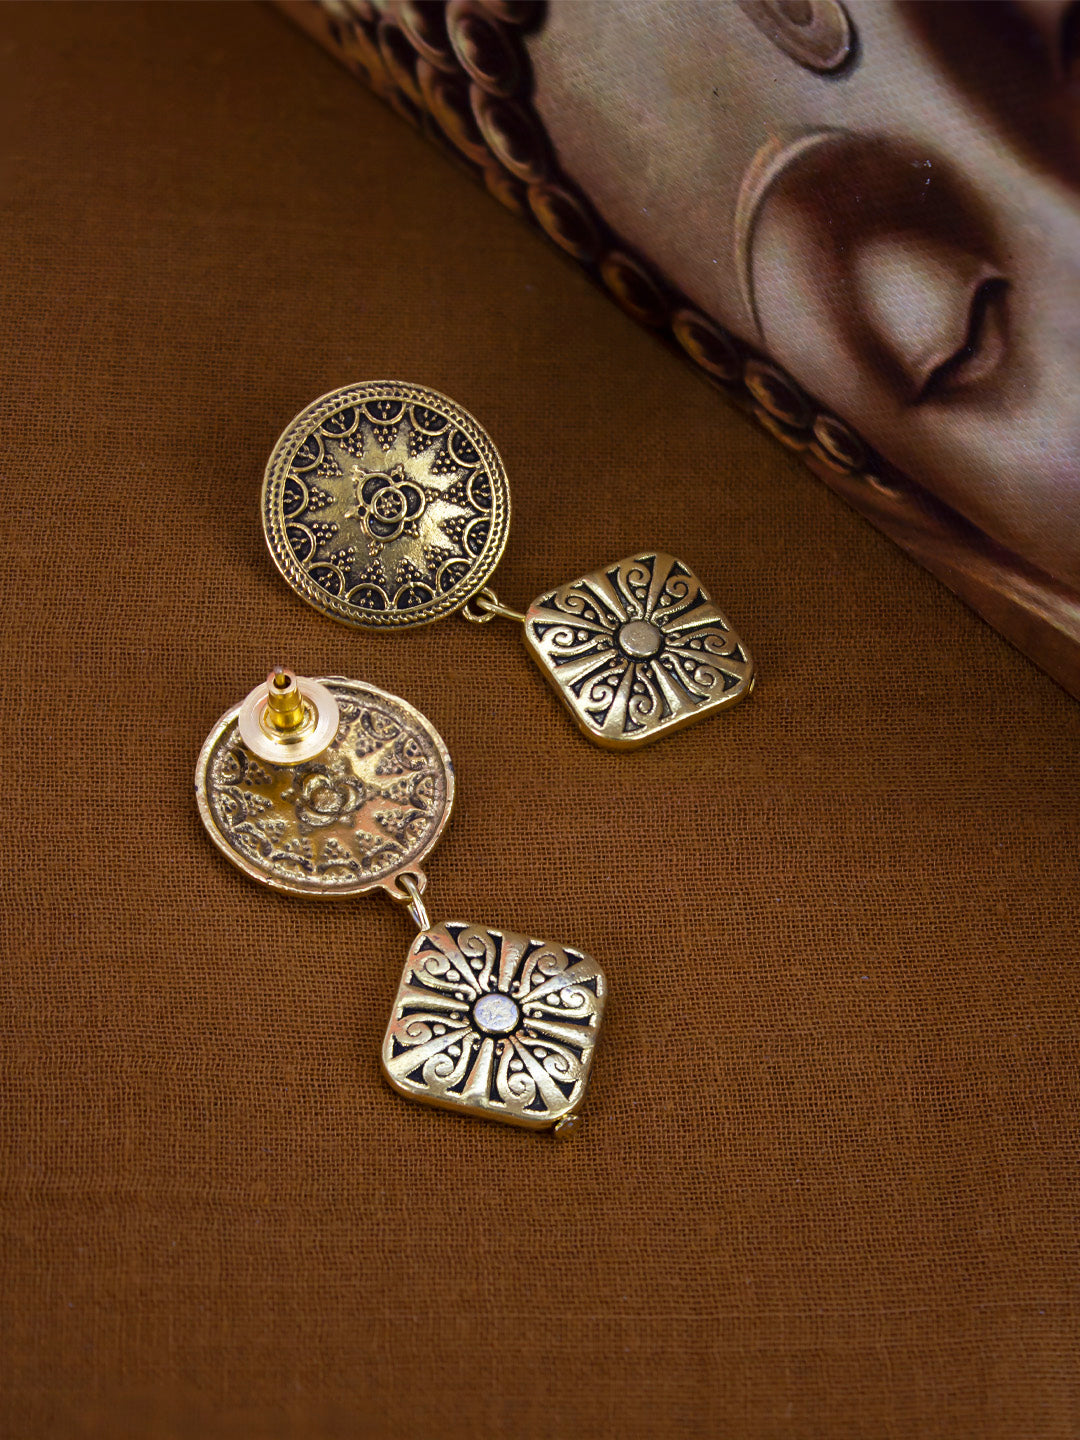 Nakshi Traditional Handcrafted Art Pearl Bead & Gold Metal Goddess Lakshmi Necklace Set